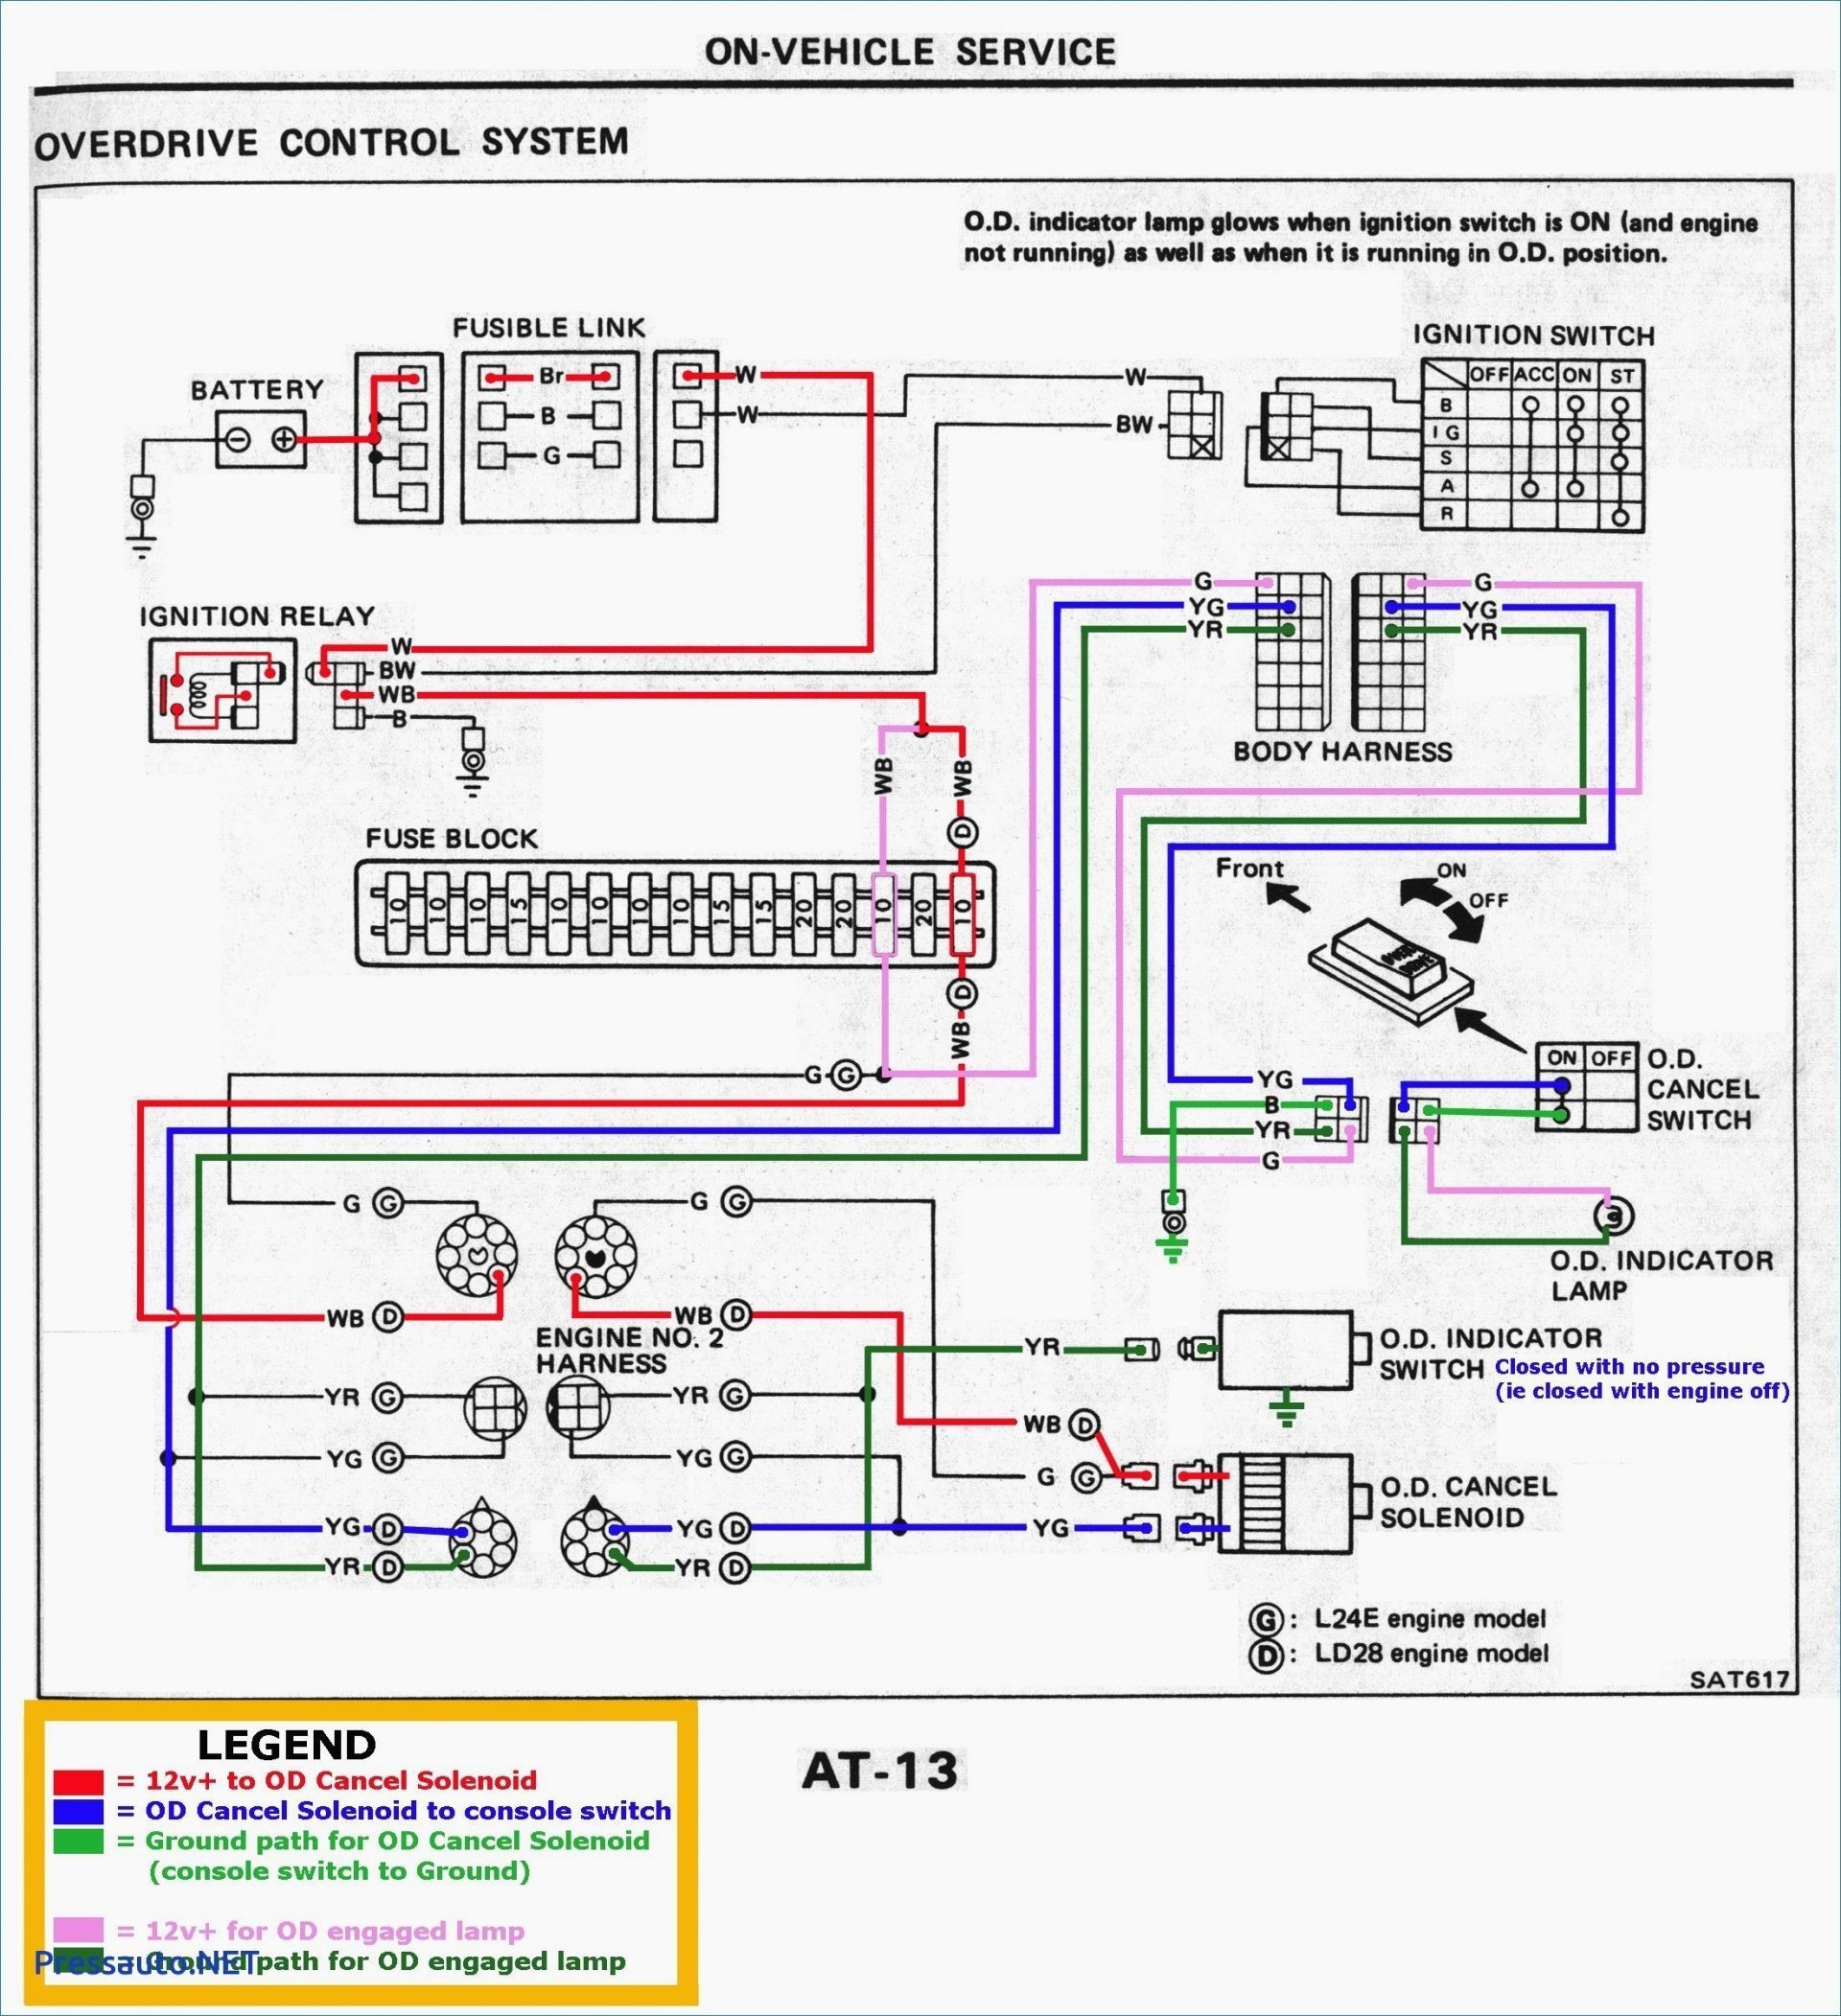 1999 Dodge Caravan Engine Diagram 2001 Caravan Wiring Diagram Ignition Data Schematics Wiring Diagram • Of 1999 Dodge Caravan Engine Diagram